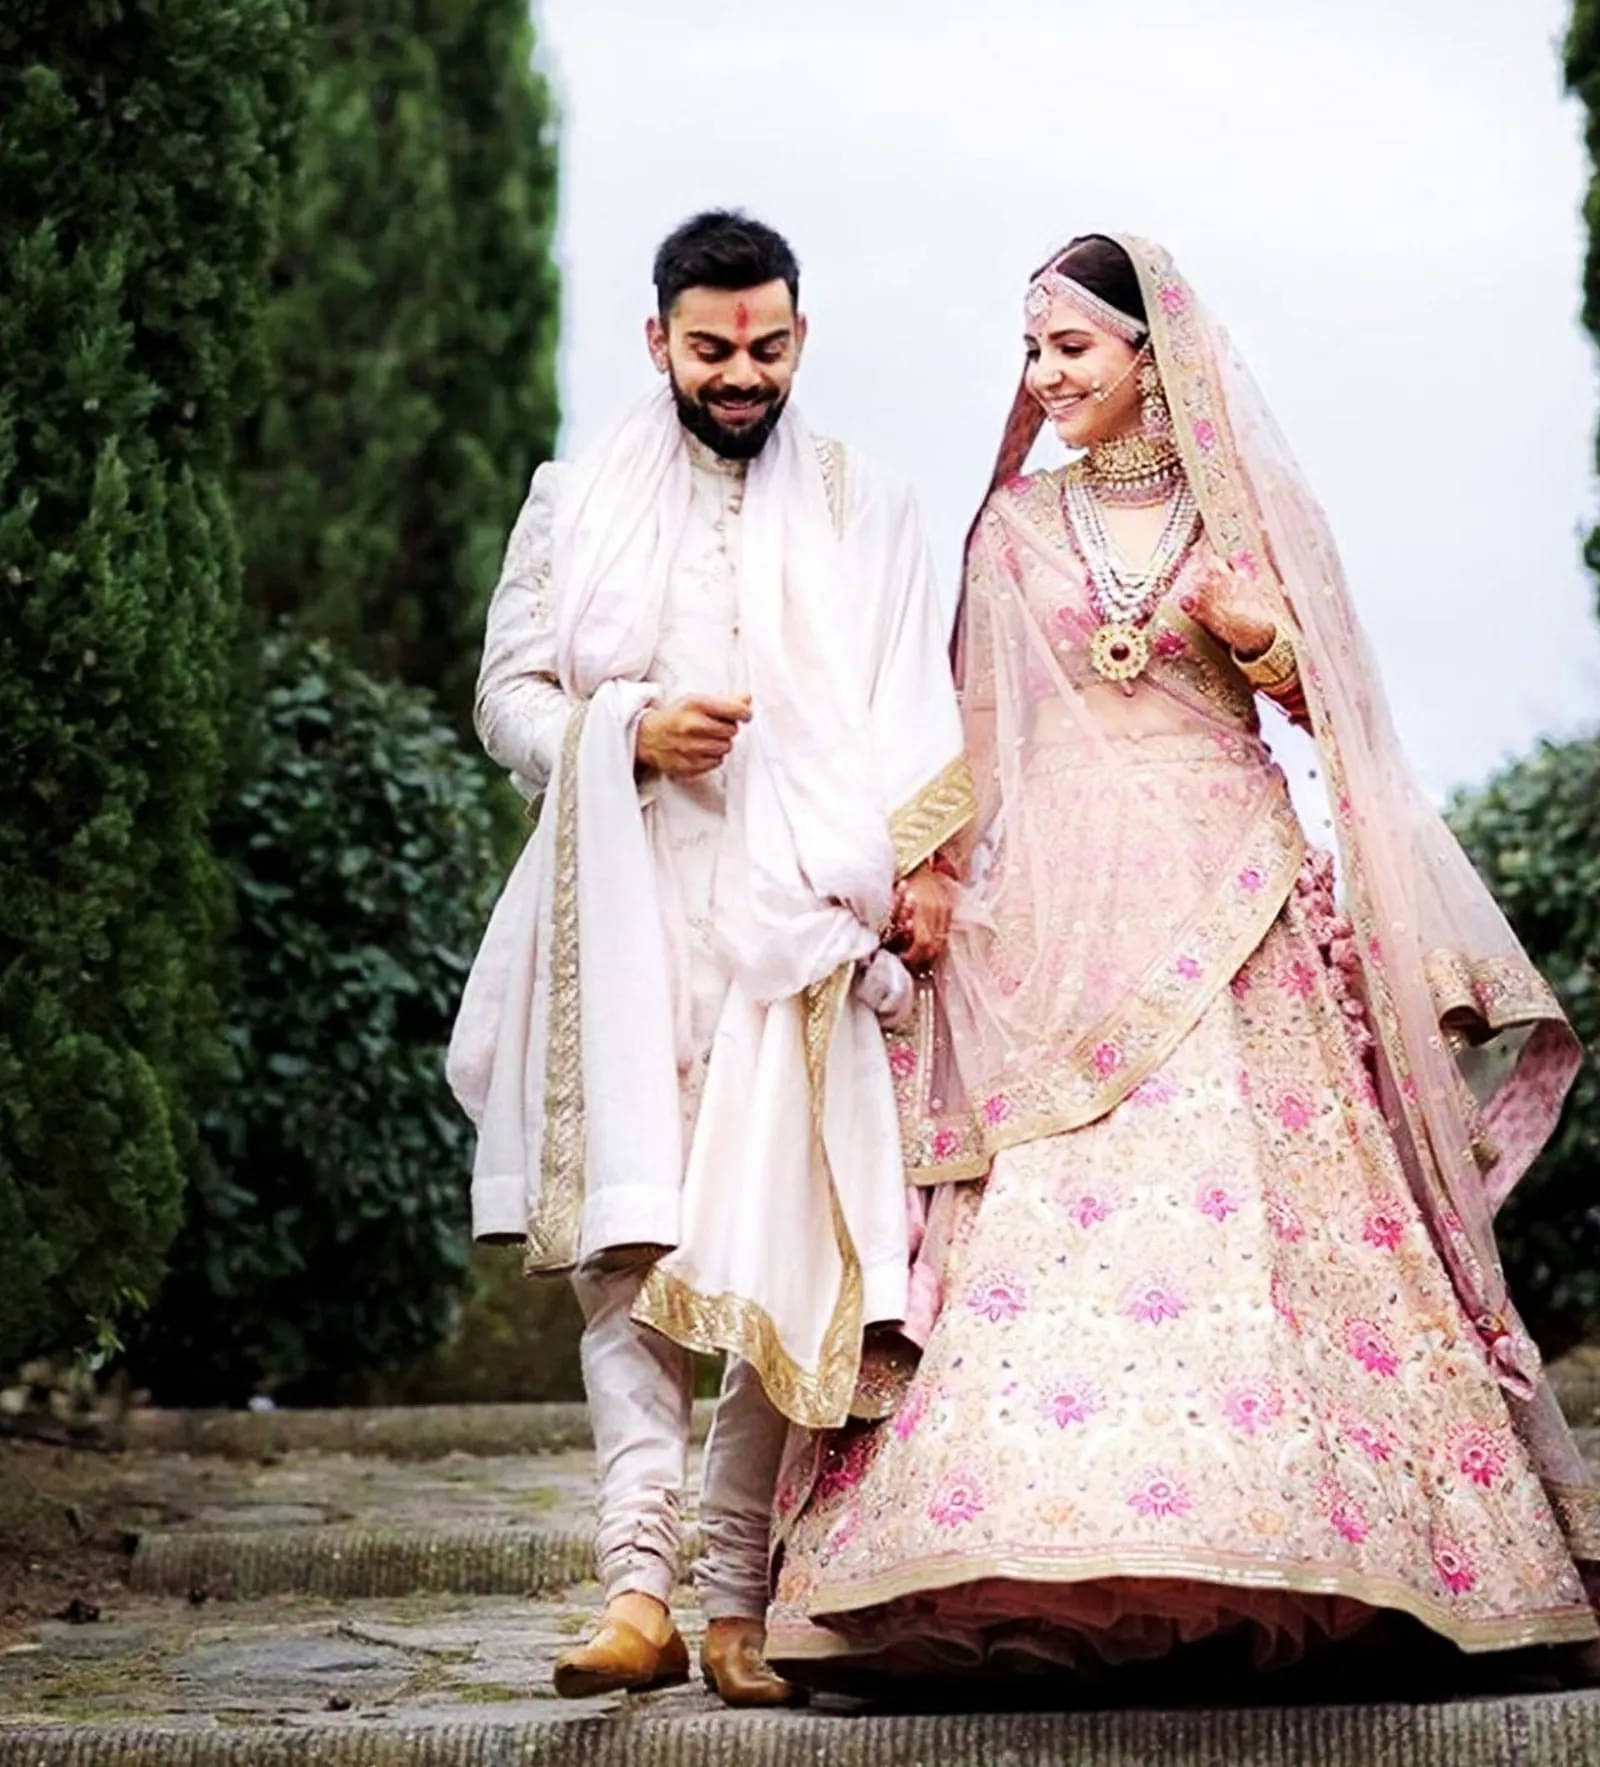 Surbhi Chandana Spotted With Husband Karan Sharma First Time After Wedding  - See Pics